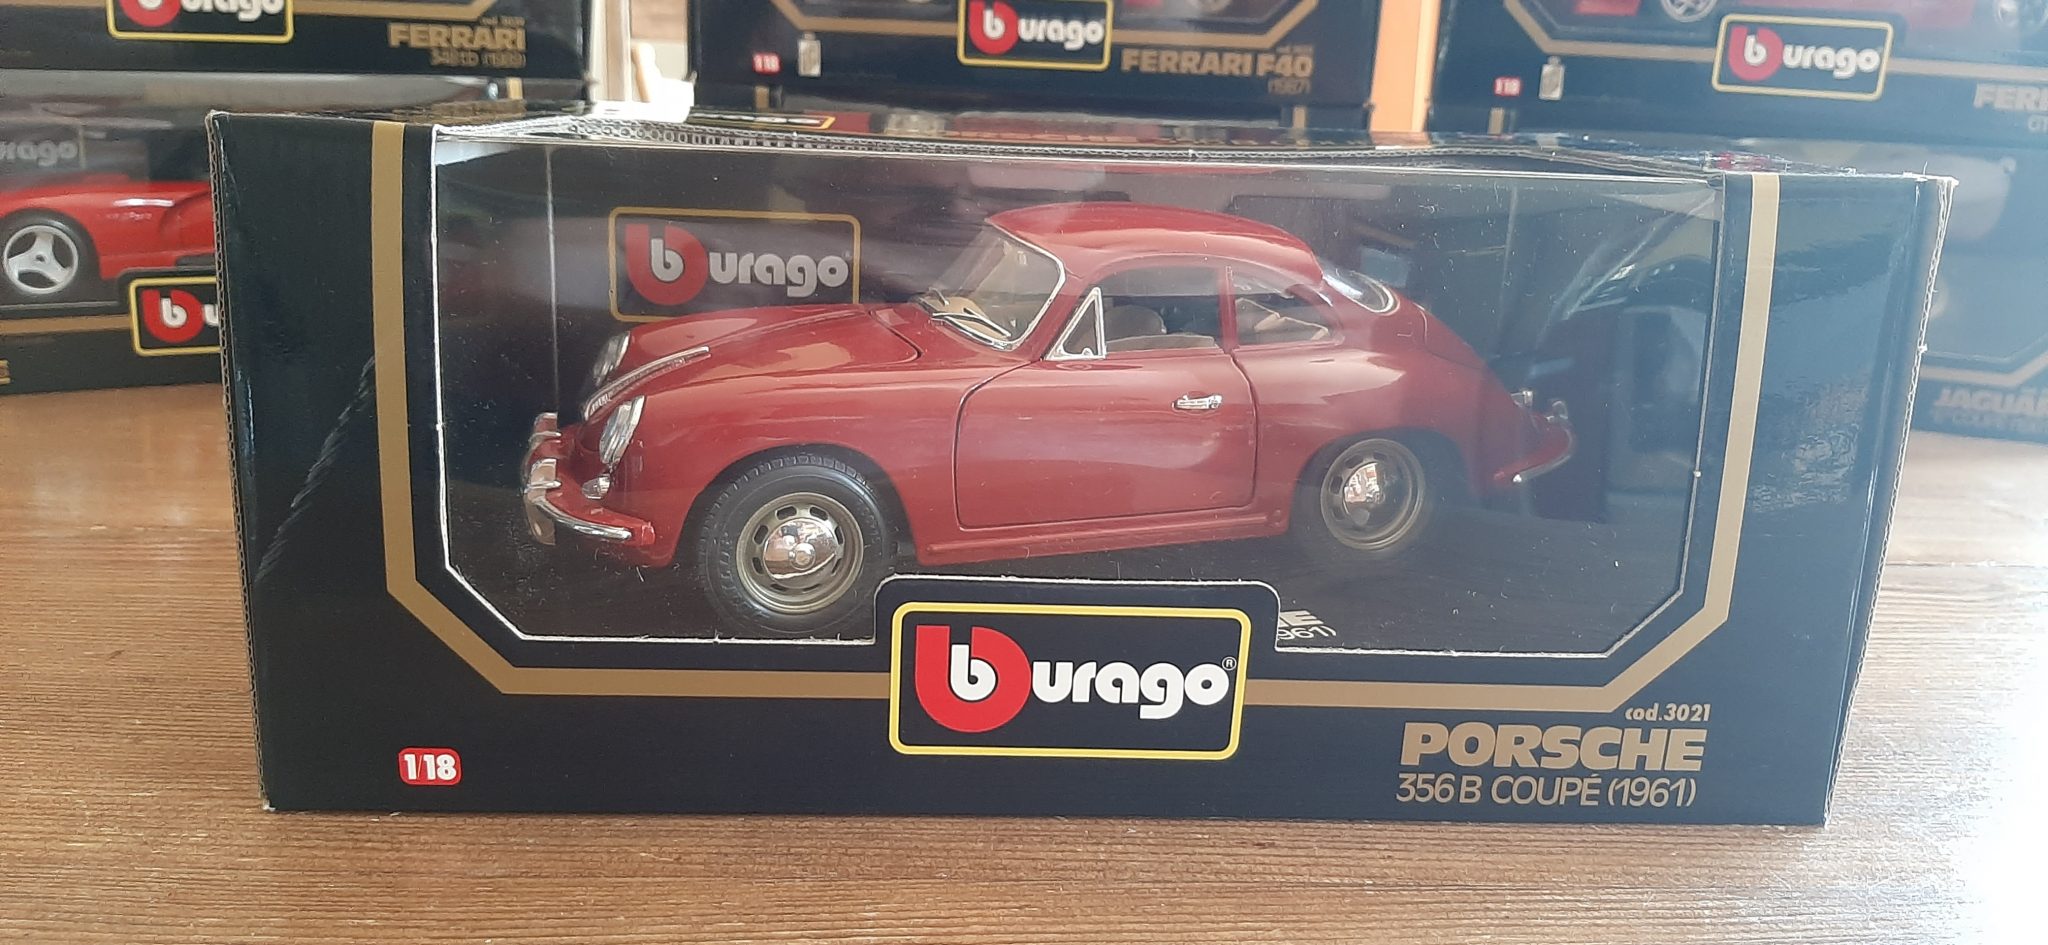 Burago, Porsche, 356B, 1961, Voiture miniature de collection, Diecast 1/18